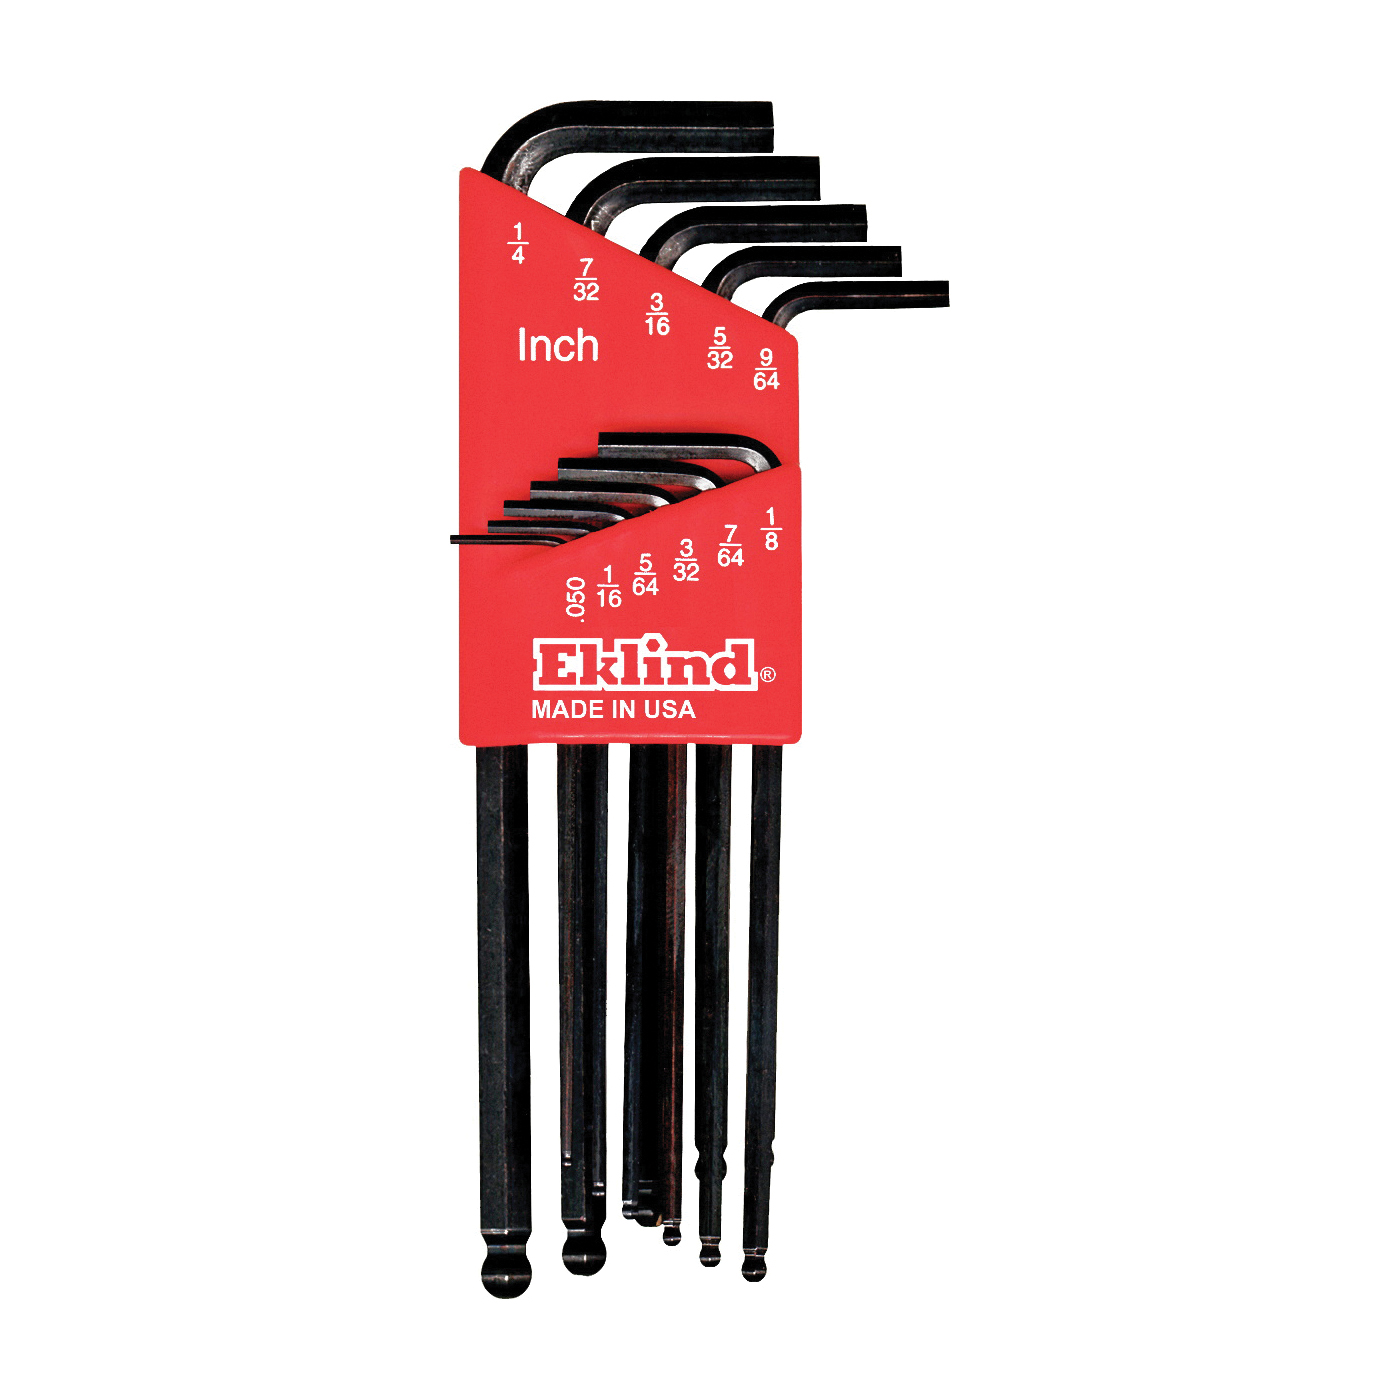 Eklind® 10609 Hex-L® Long Key Set With Holder, 9 Pieces, 1.5 to 10 mm Hex, L-Handle Handle, ANSI B18.3, Alloy Steel, Black Oxide